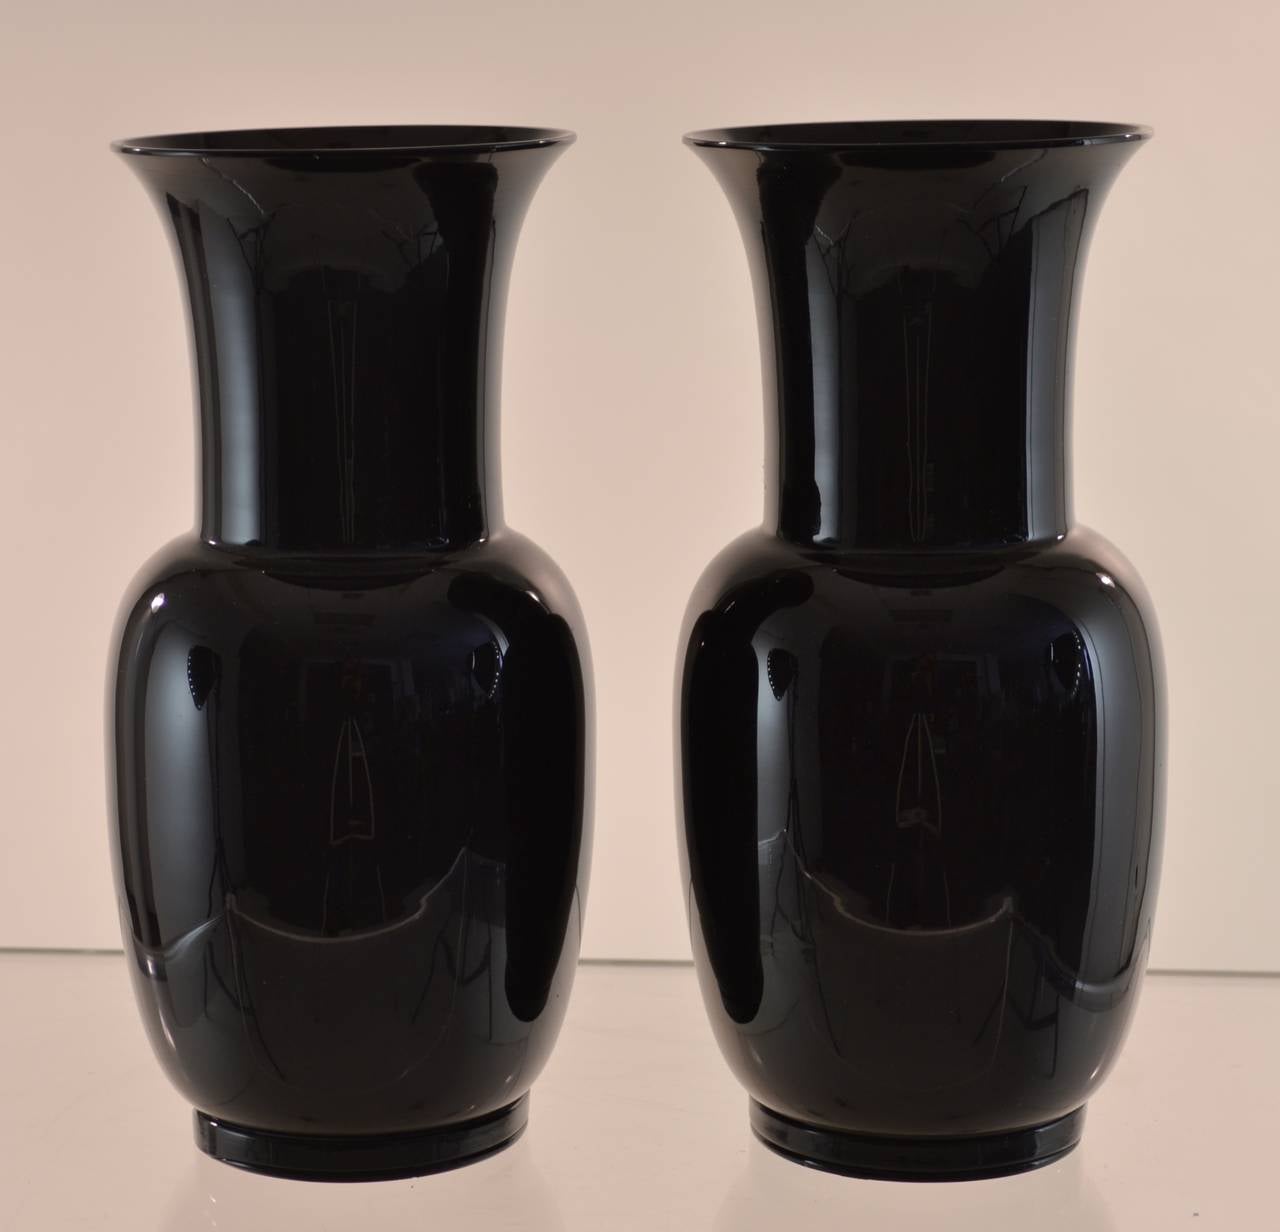 Magnificent pair of black Murano glass urns, signed Venini, Italia, 1978. Pristine condition.